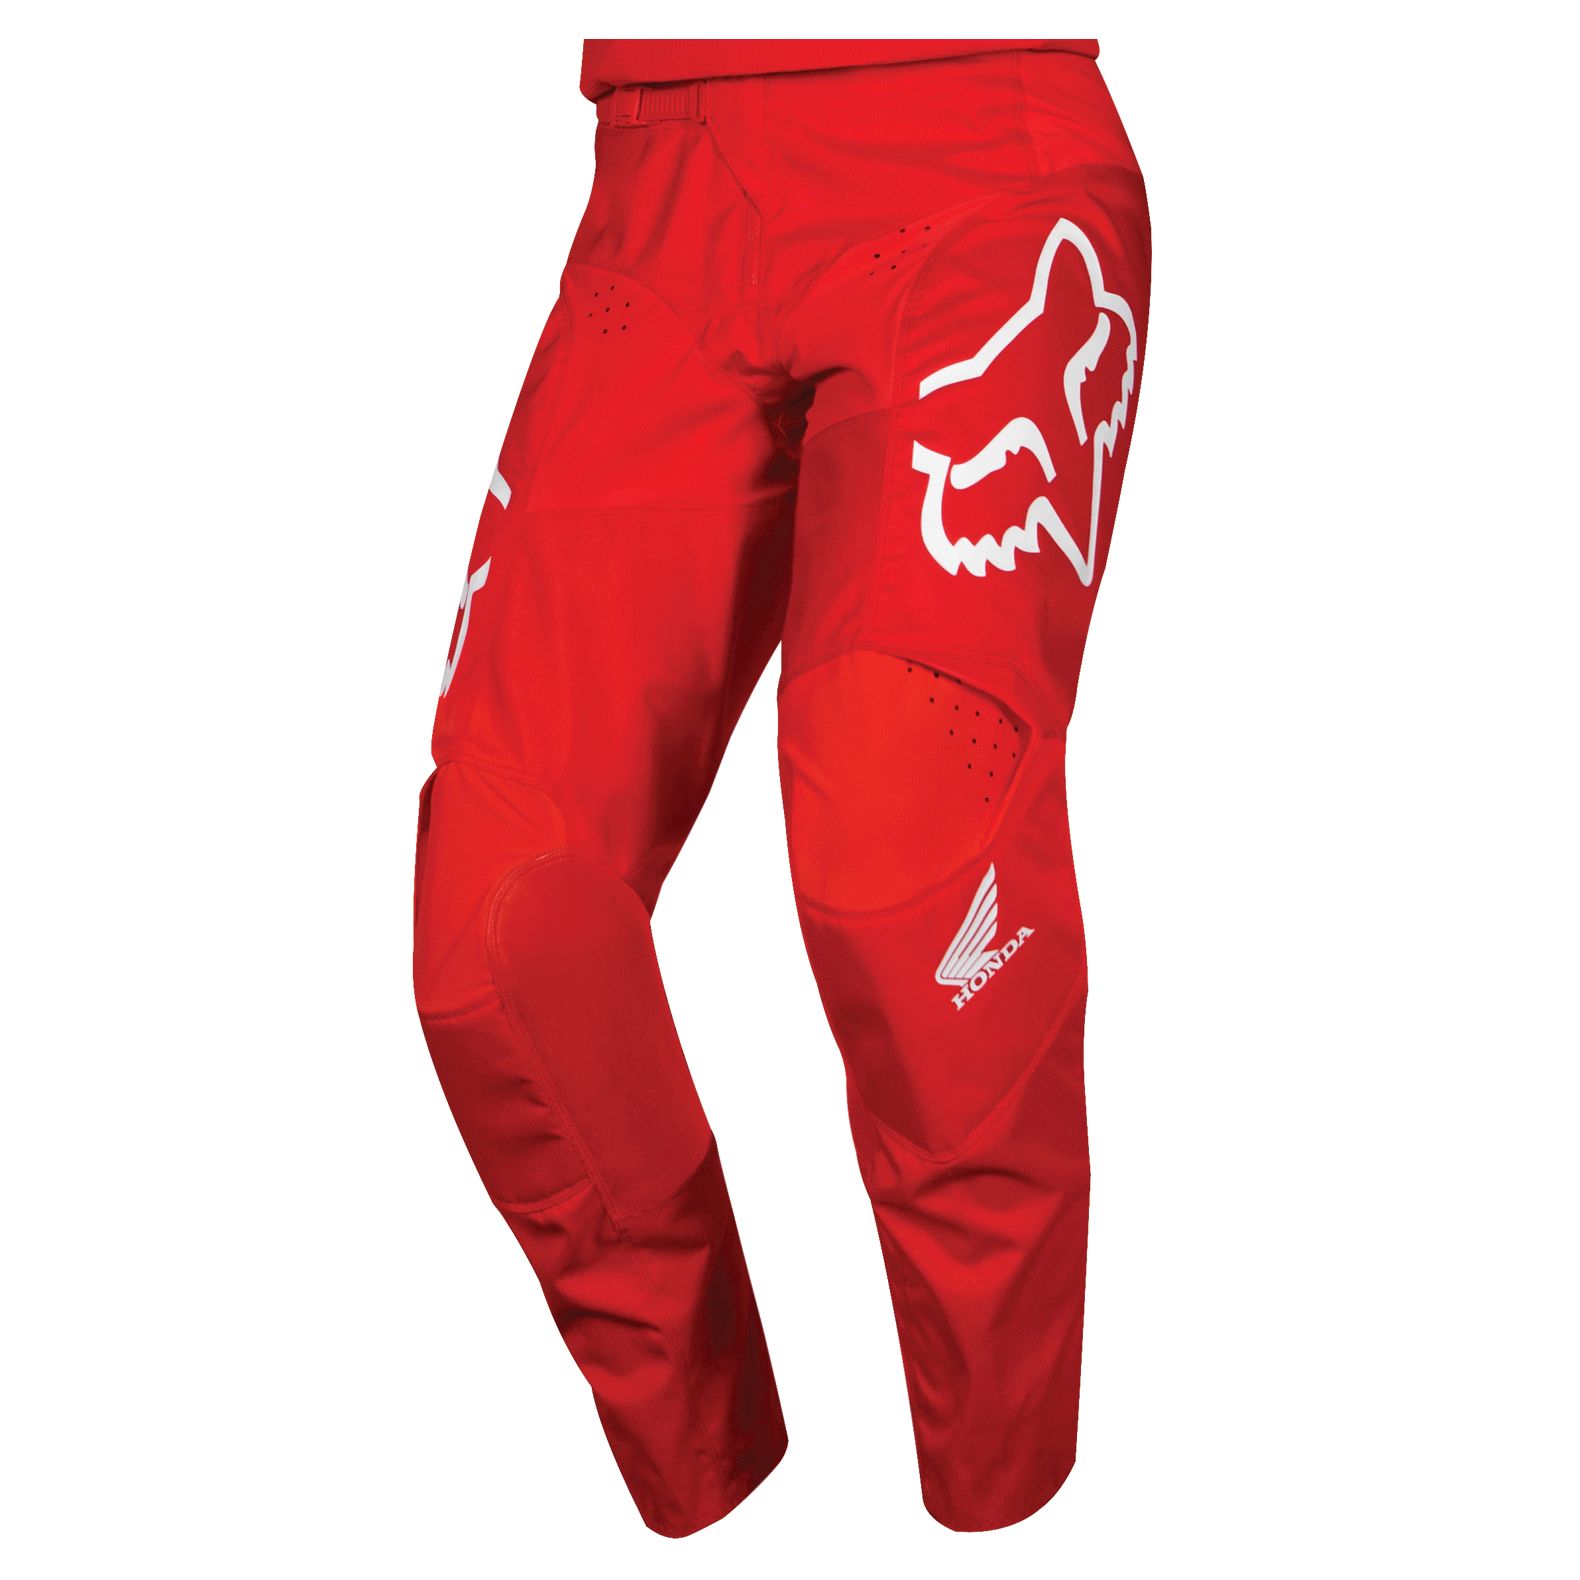 Pantaloni da cross Fox destockage 180 - HONDA - RED 2019